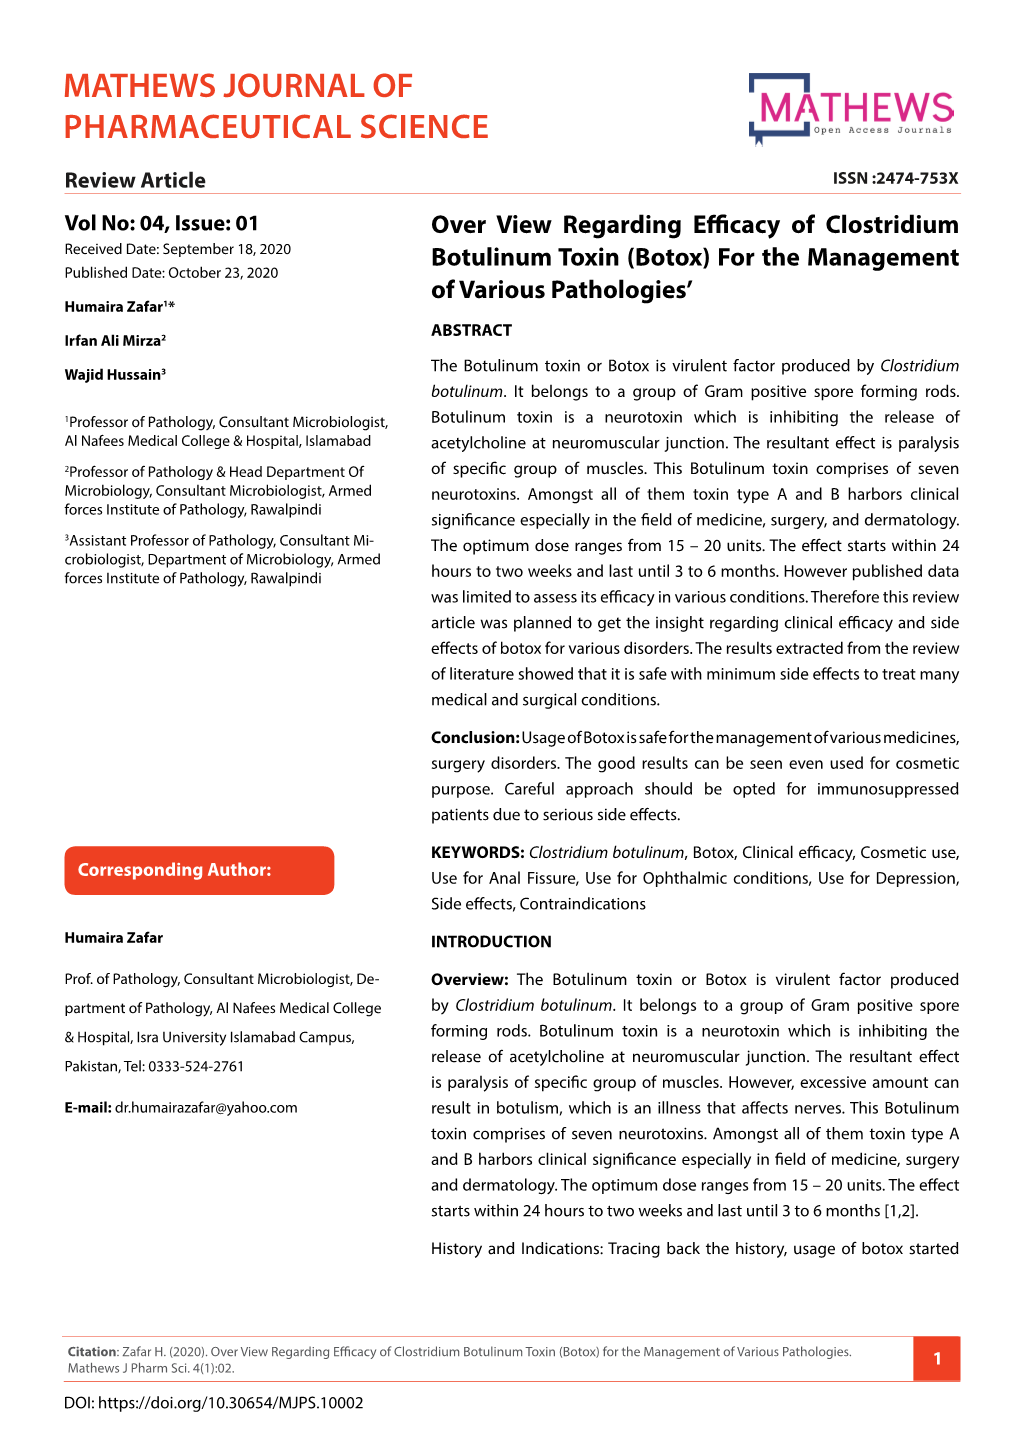 Over View Regarding Efficacy of Clostridium Botulinum Toxin (Botox) for the Management of Various Pathologies